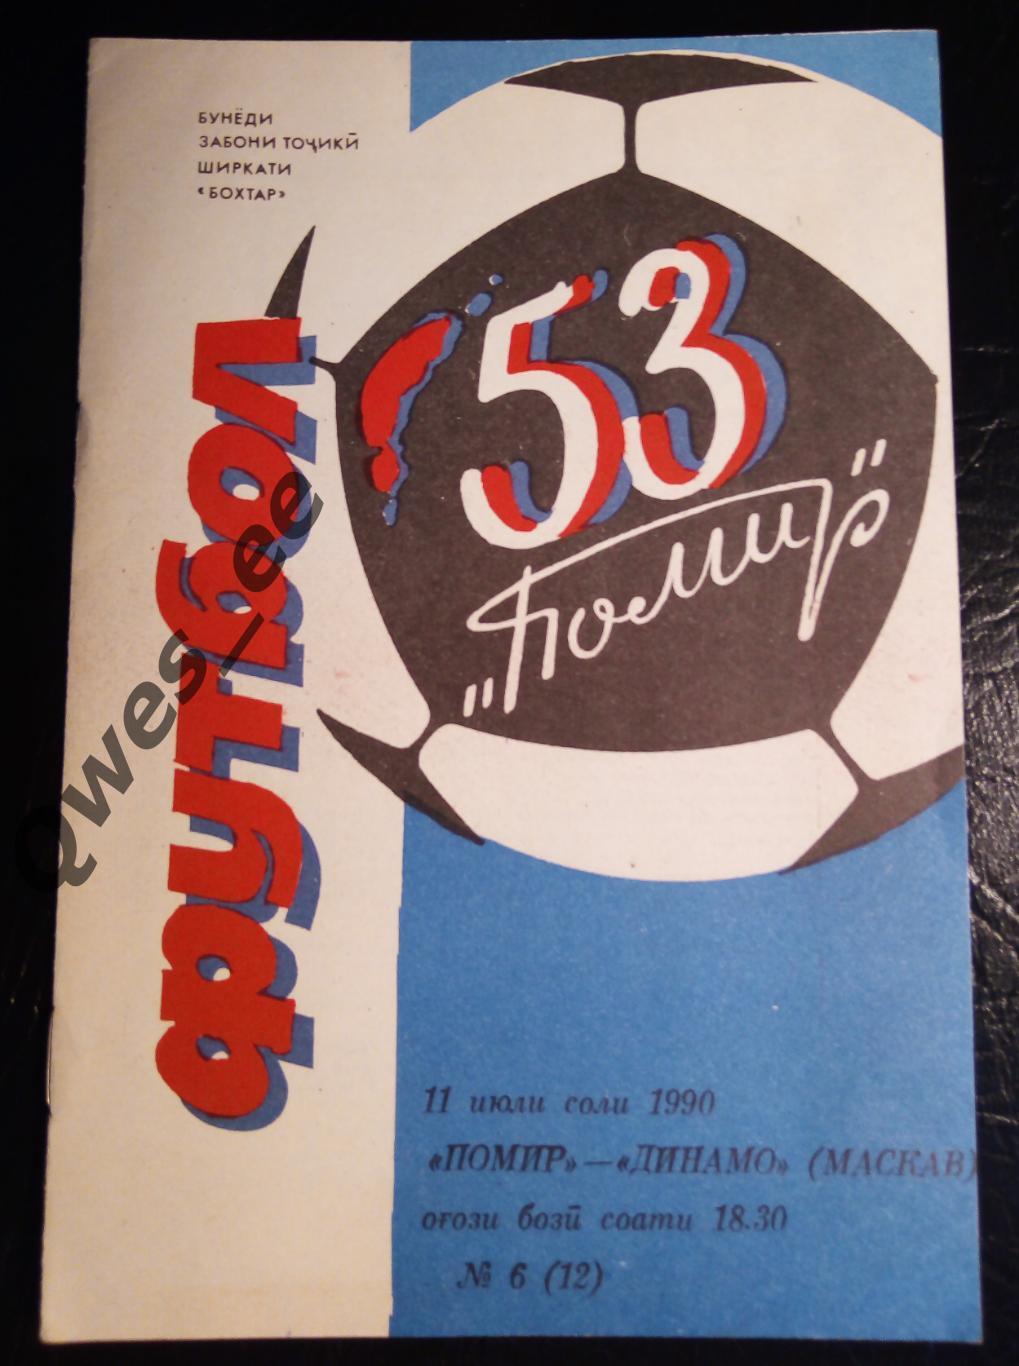 Помир Душанбе - Динамо Москва 11 июля 1990